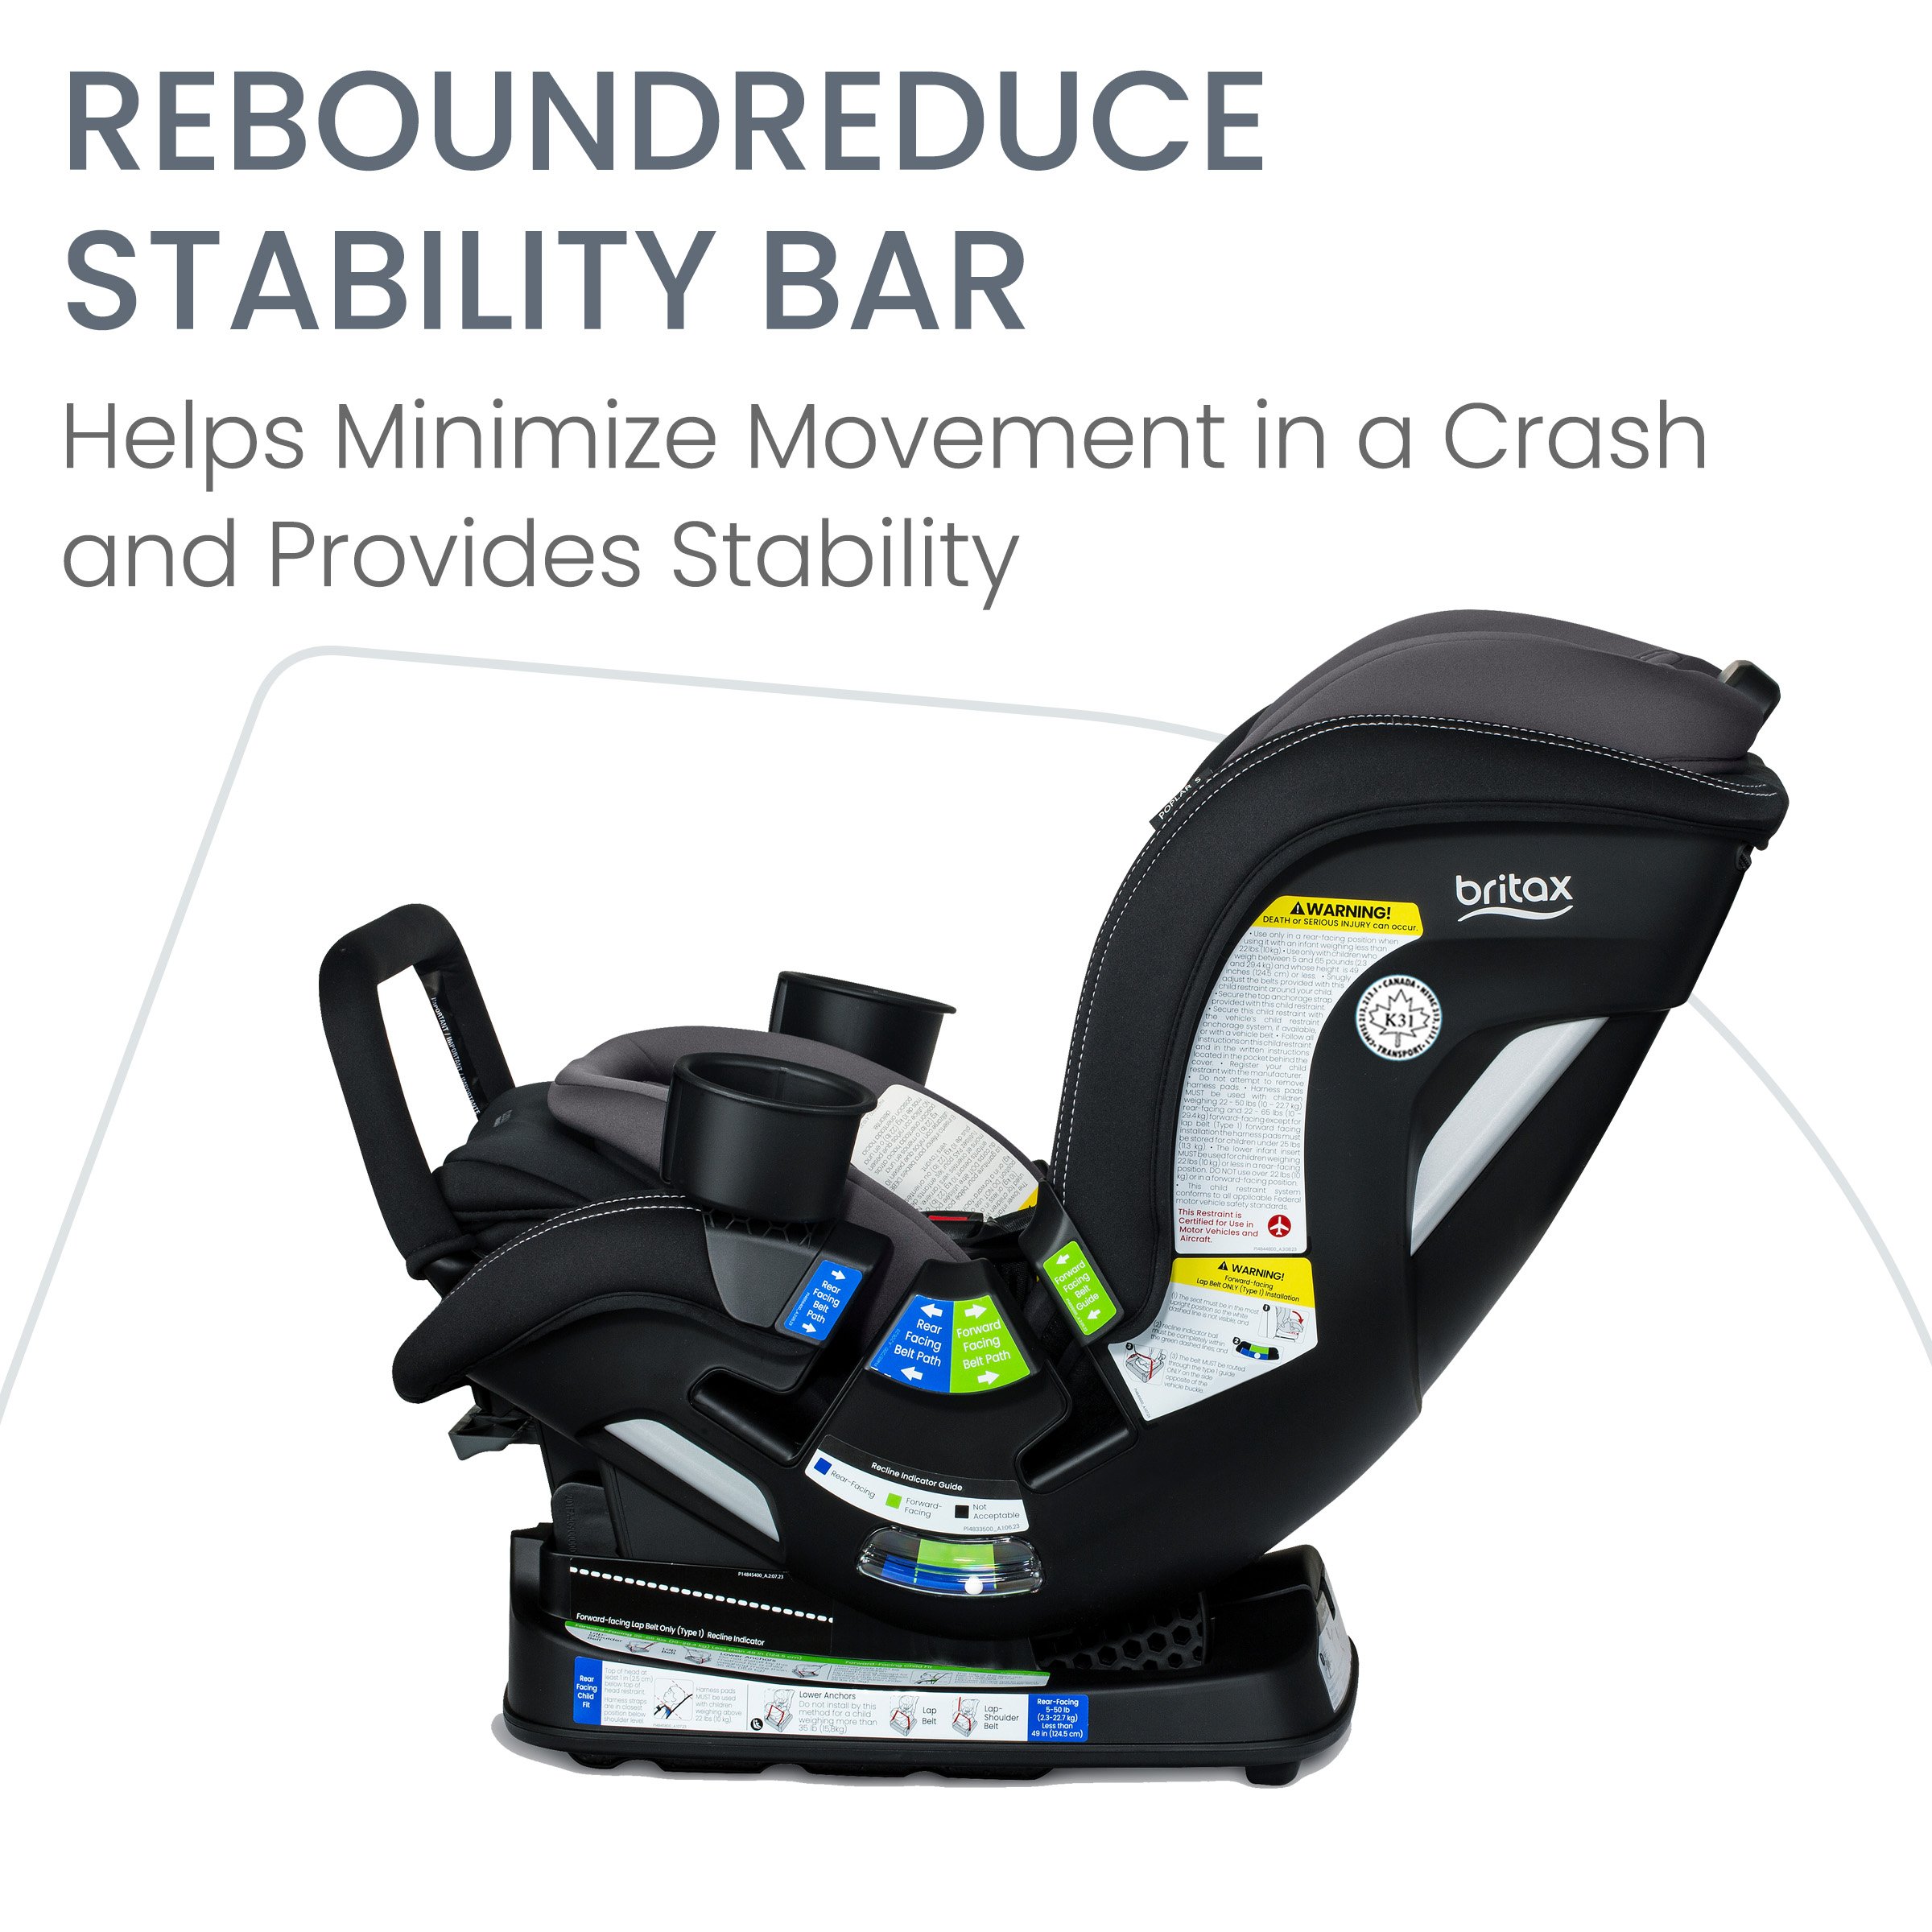 ReboundReduce Stability Bar